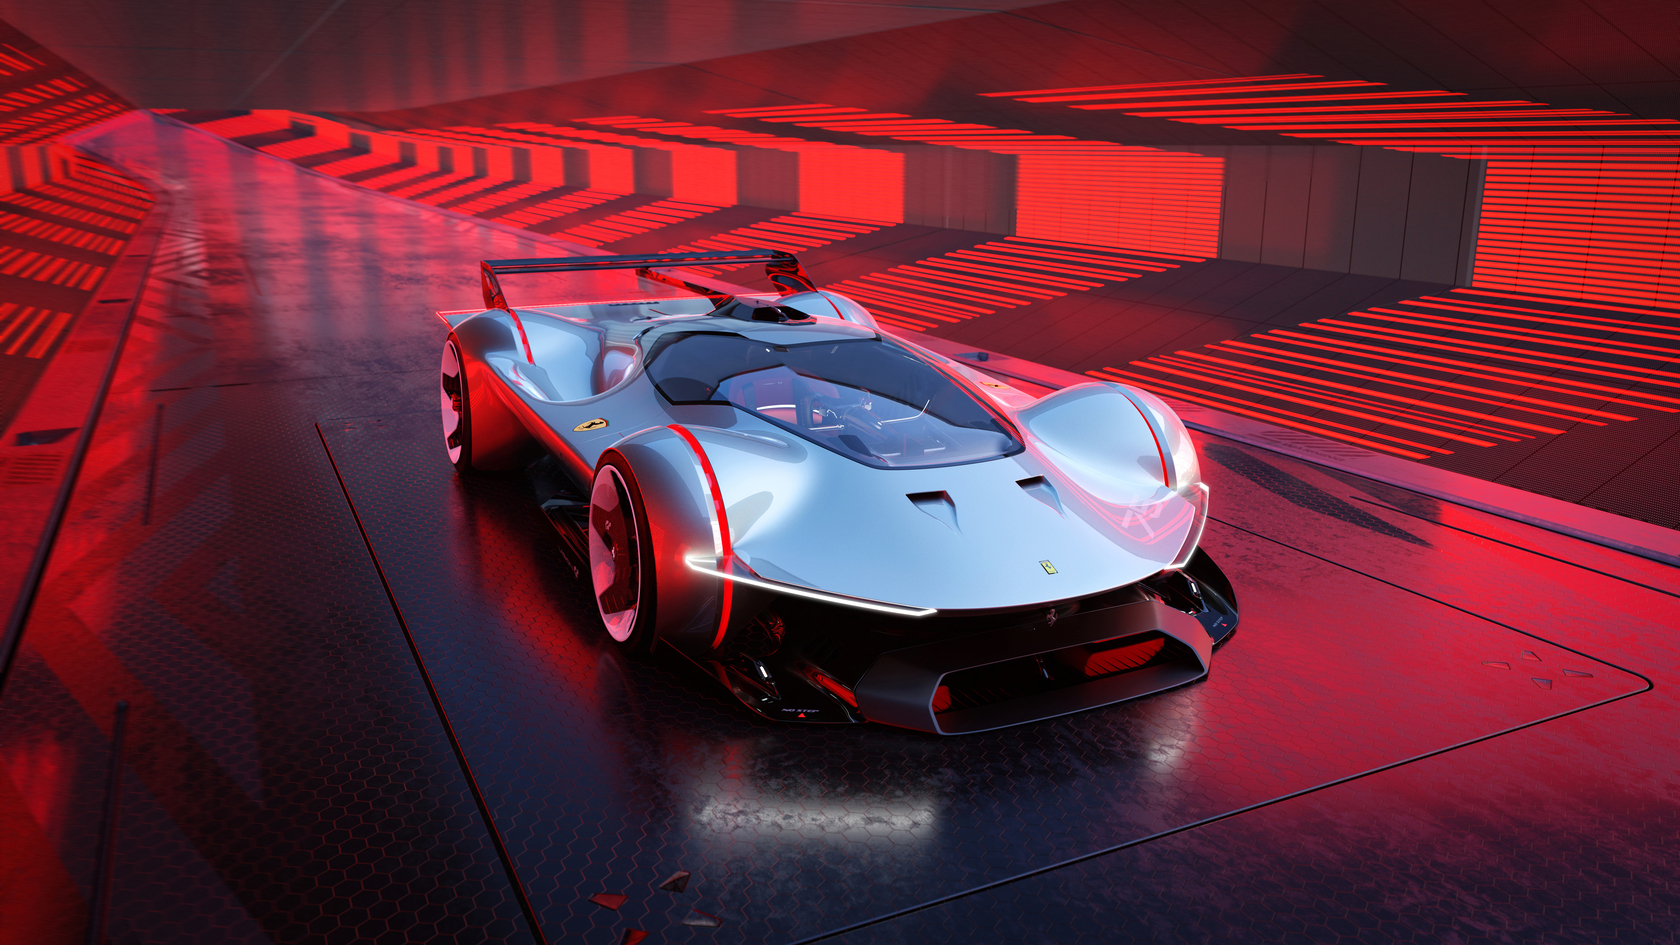 Ferrari 赛车概念作品 Vision Gran Turismo 融合了古典与现代，风格相当特别。